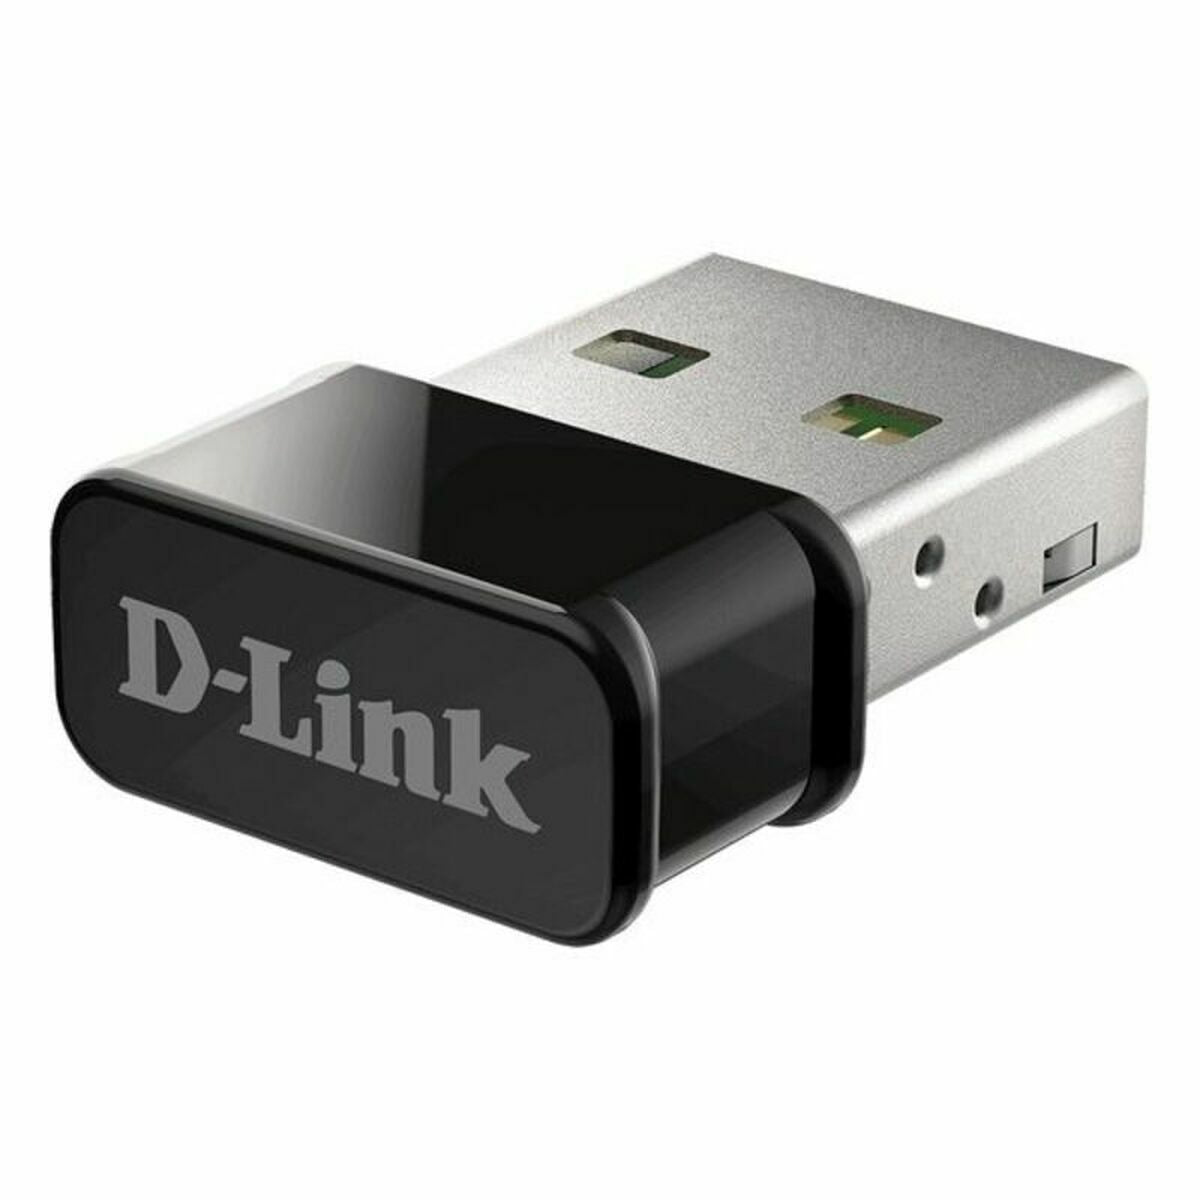 Network Adaptor D-Link DWA-181-1